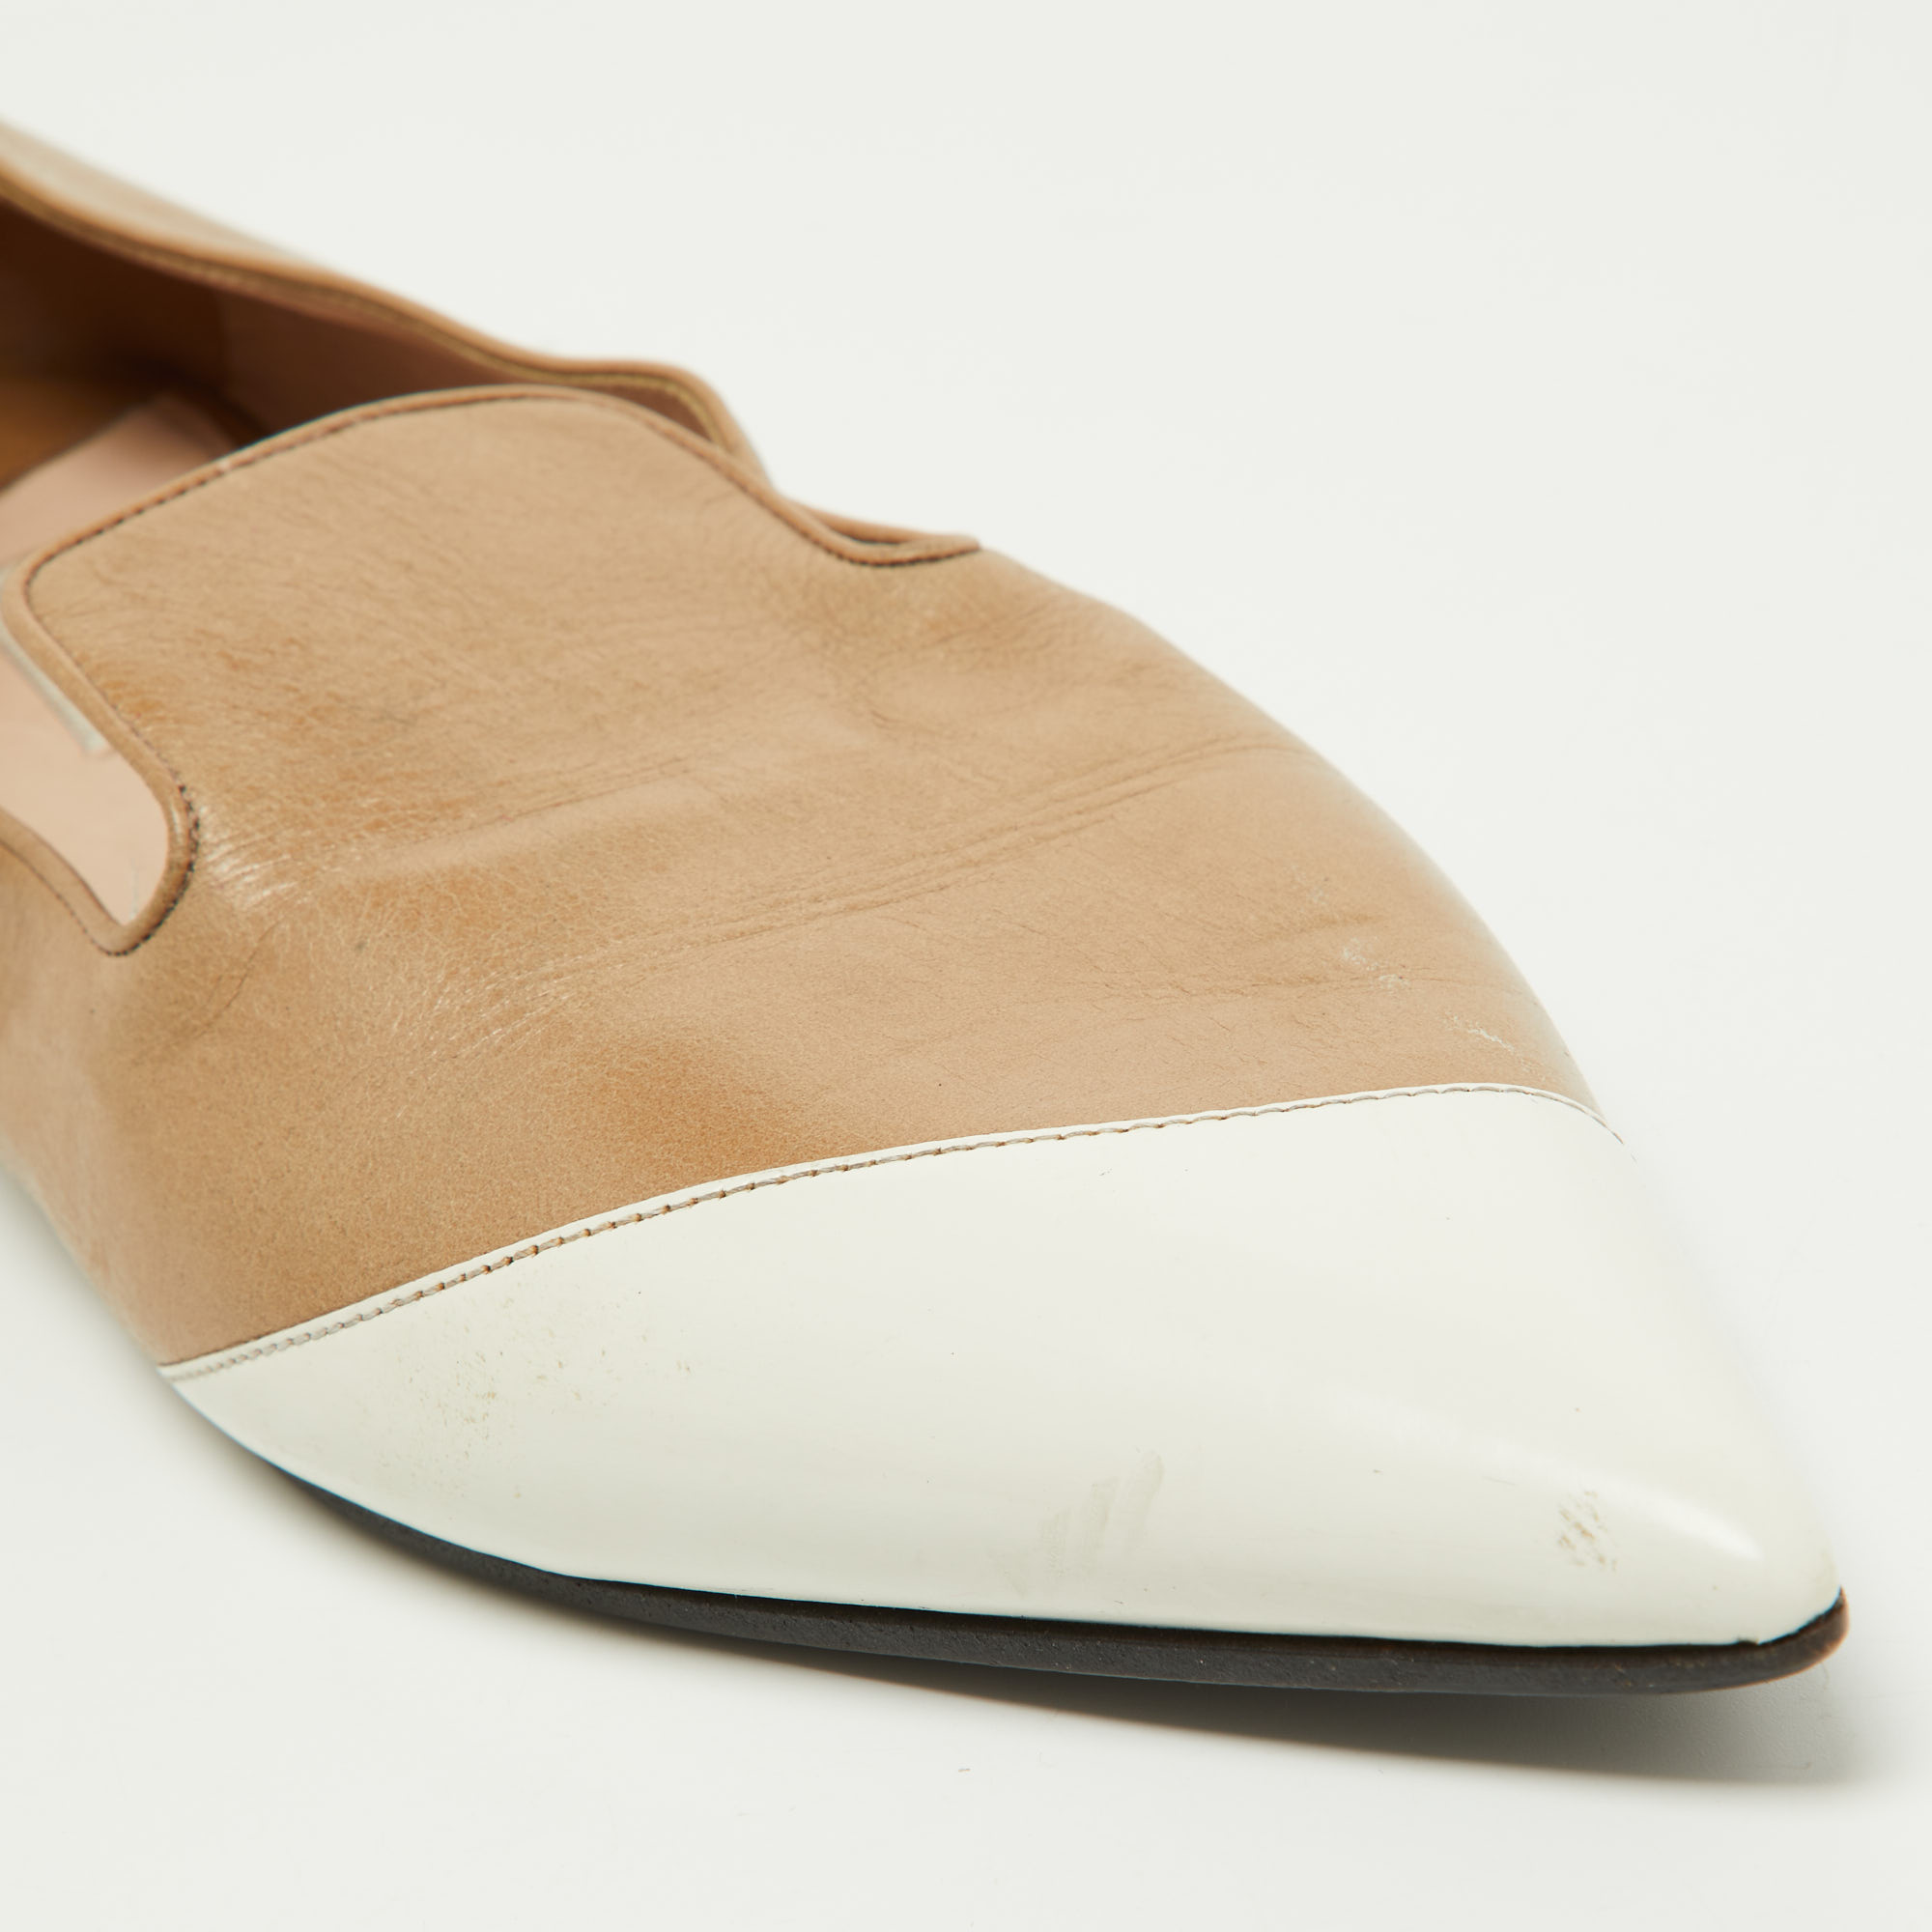 Miu Miu Beige/White Leather Pointed Toe Smoking Slipper Size 42